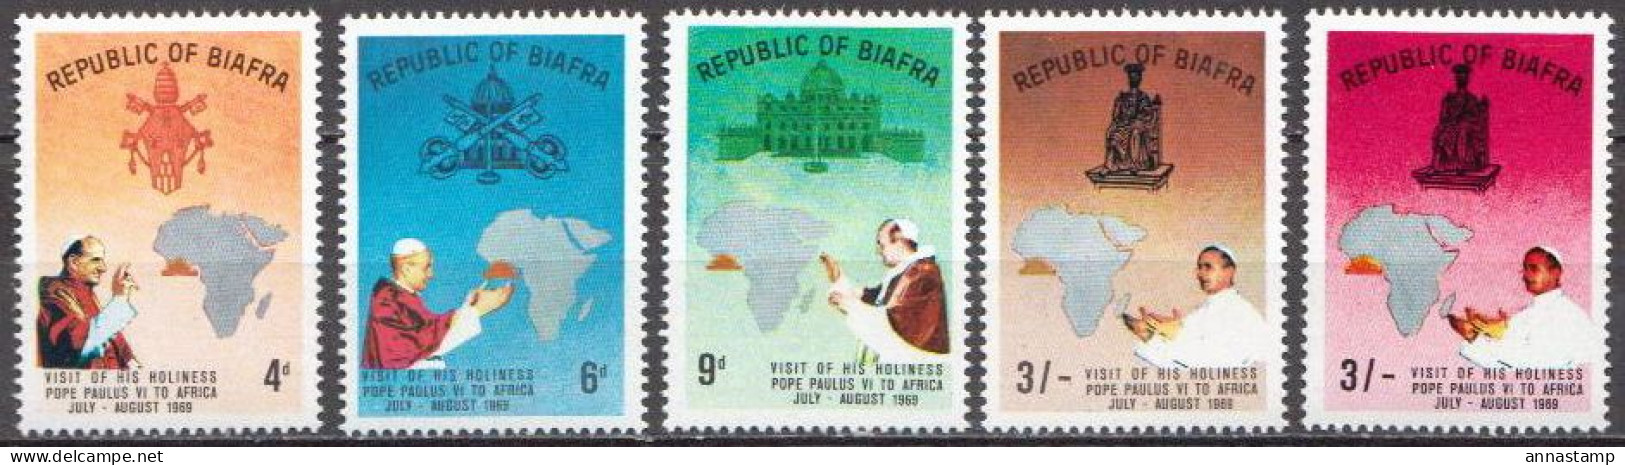 Biafra MNH Set With Error Stamp - Papes